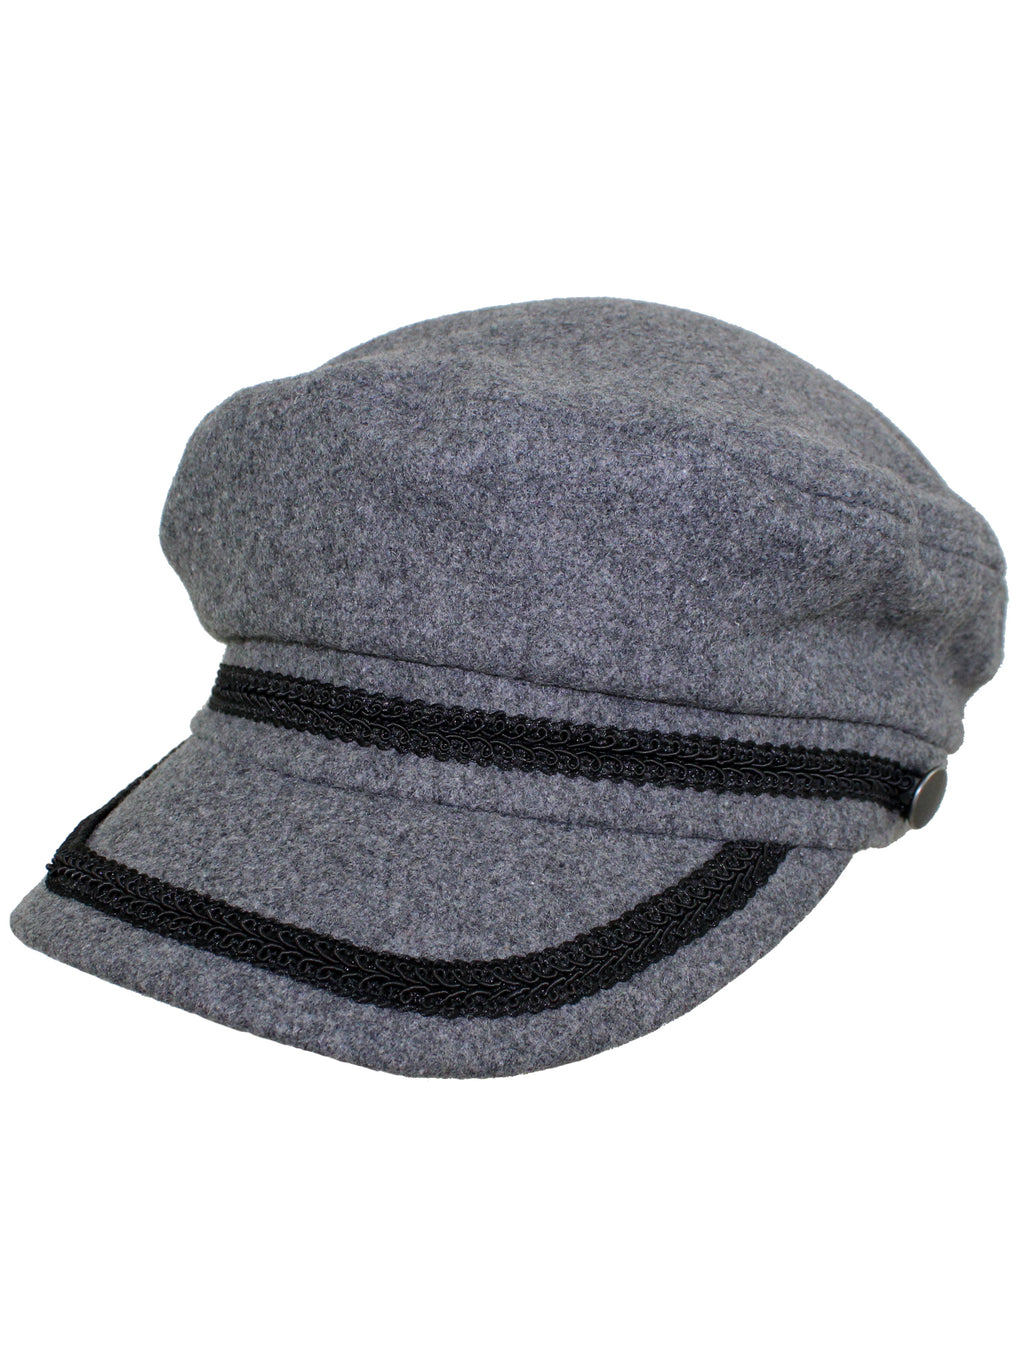 Charcoal Gray Wool Fisherman Cabbie Hat